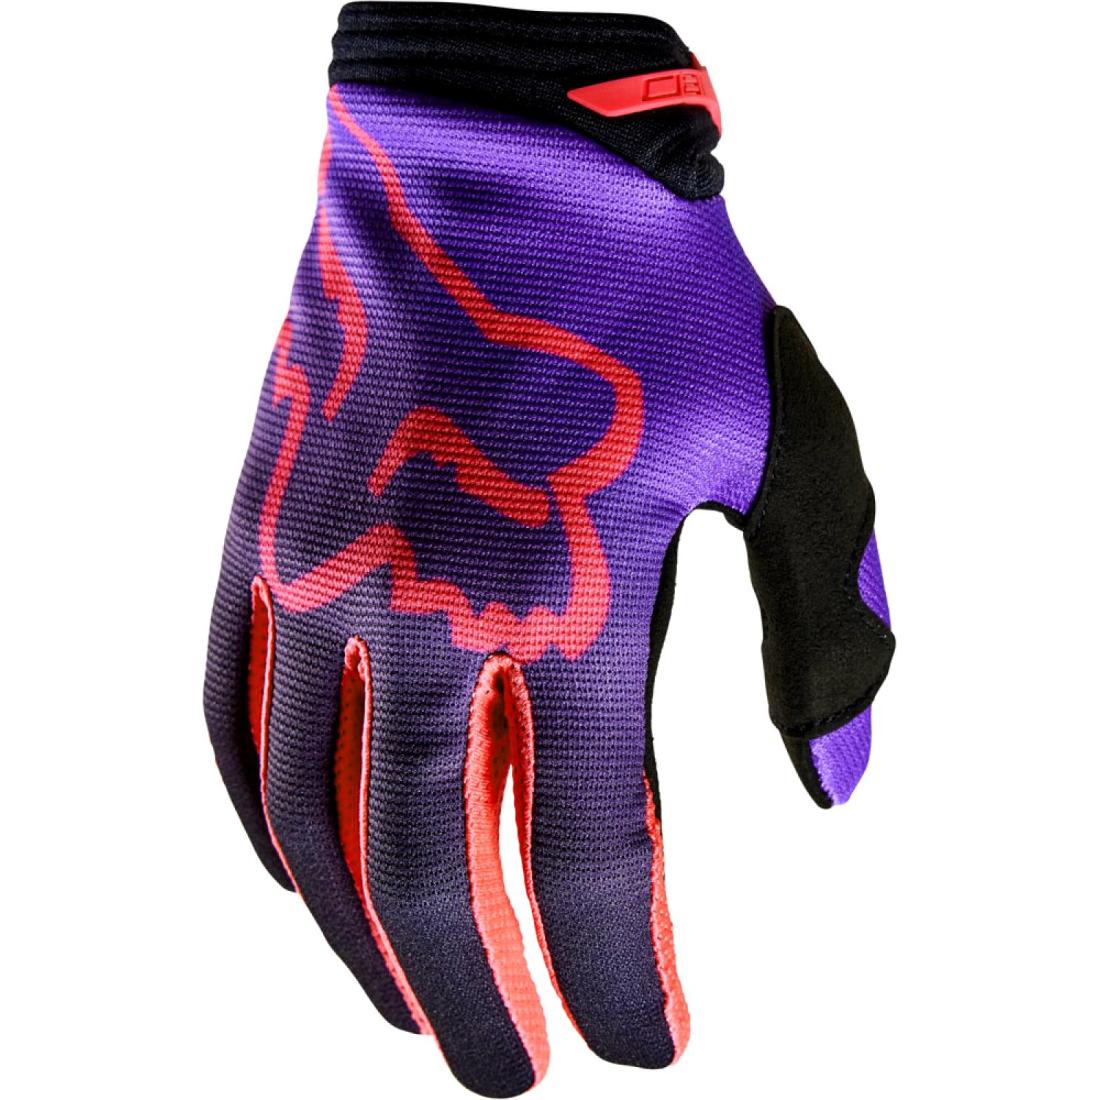 Wmns 180 Toxsyk Glove Black/Pink